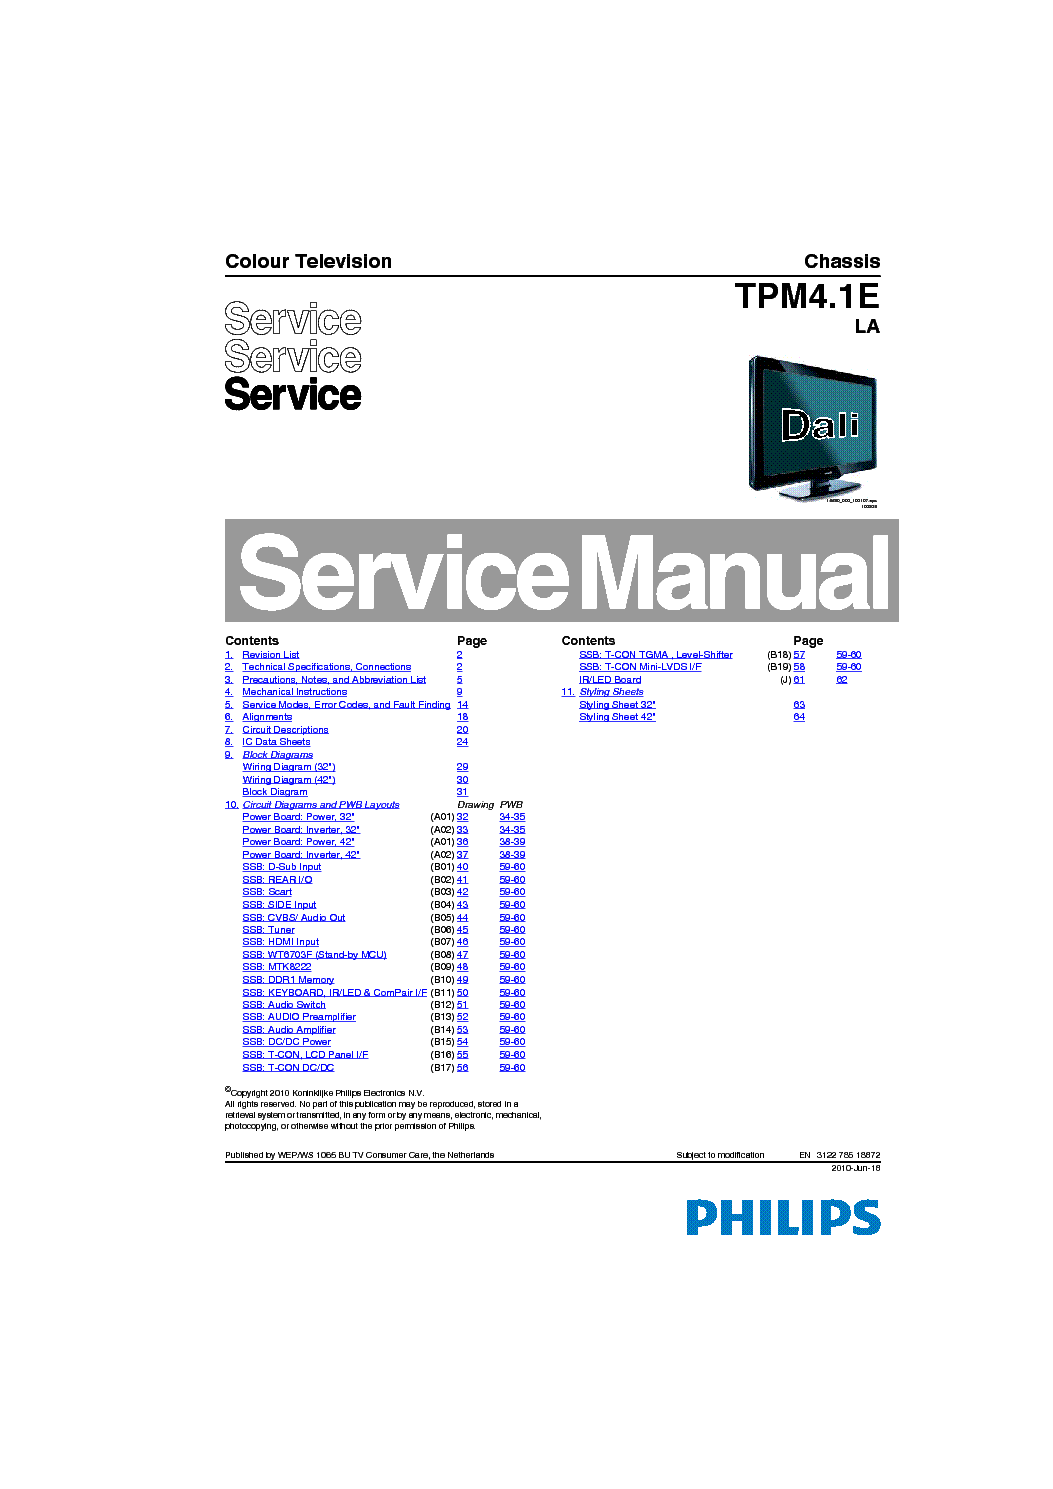 PHILIPS CHASSIS TPM4.1E LA SM service manual (1st page)